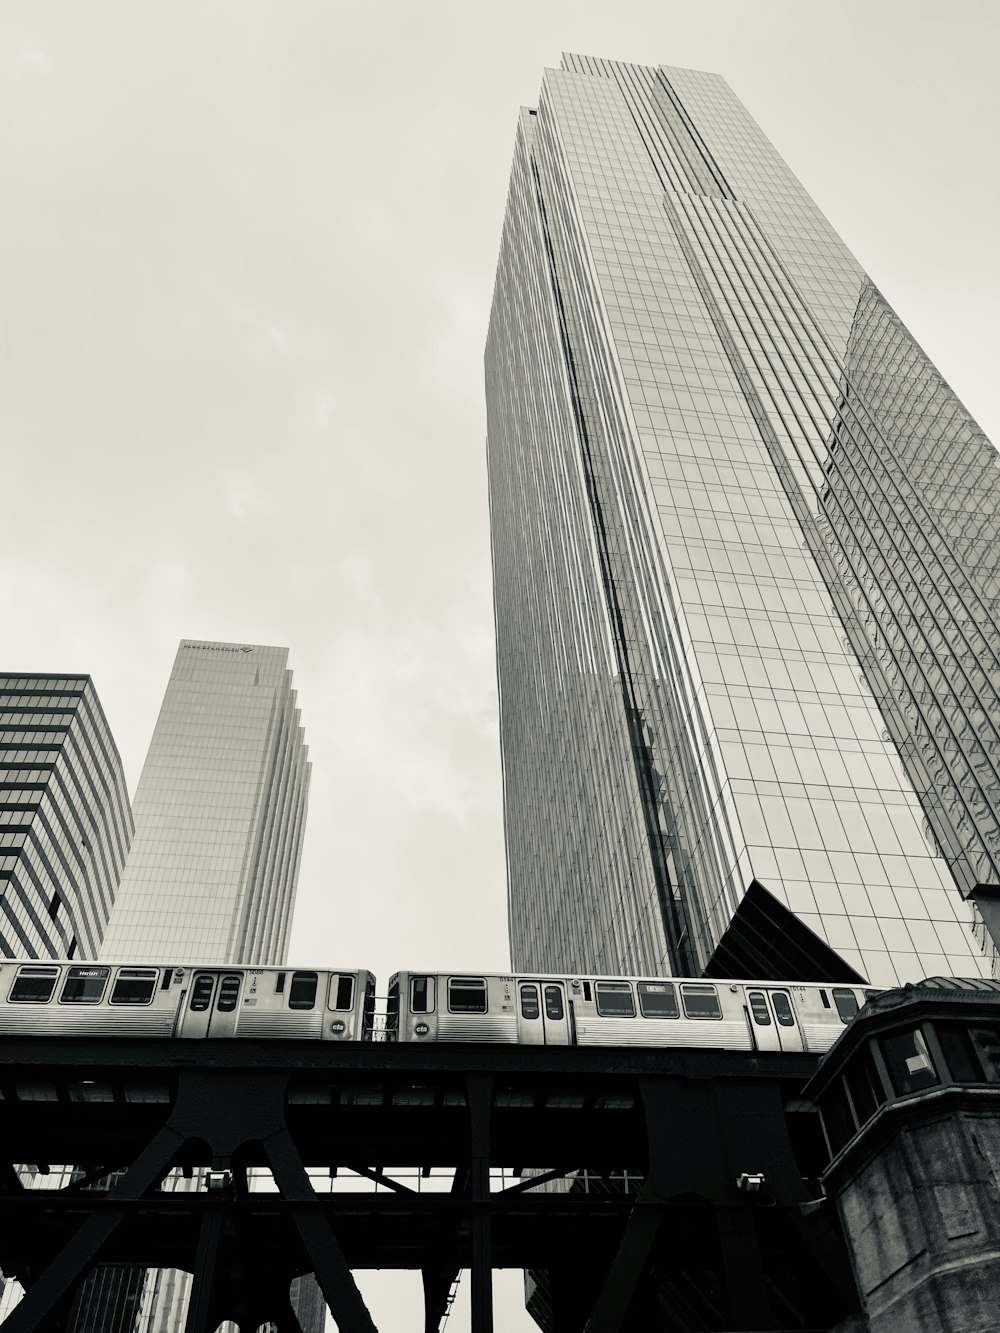 a train going by a skyscraper